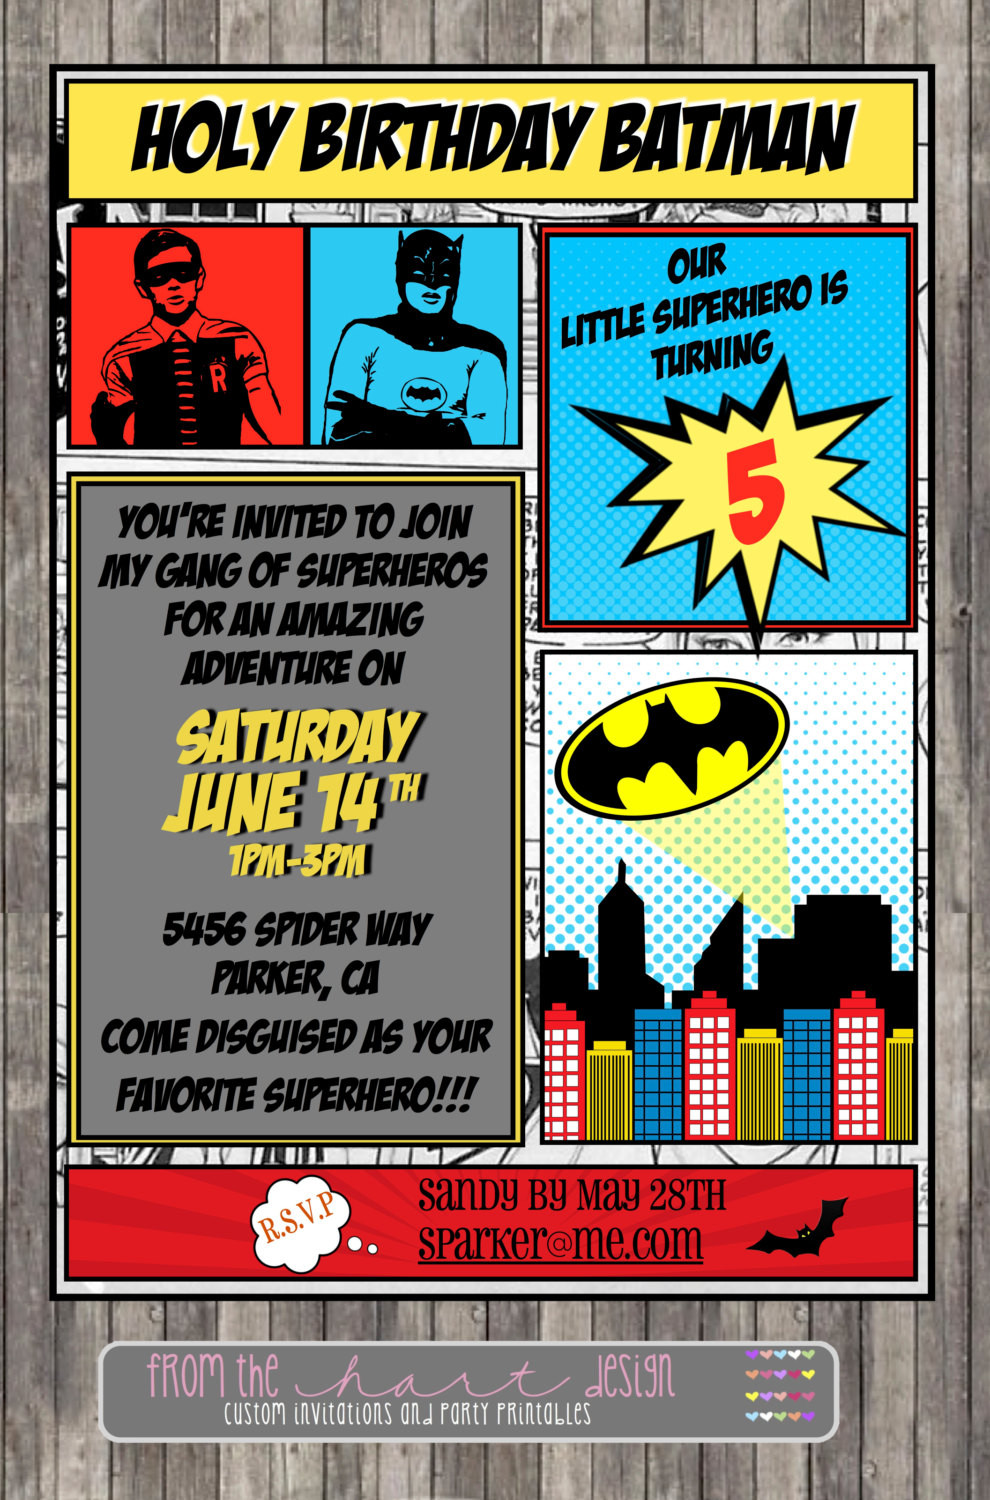 Best ideas about Batman Birthday Invitations
. Save or Pin Batman Birthday Party Invitation ic Superhero Marvel Now.